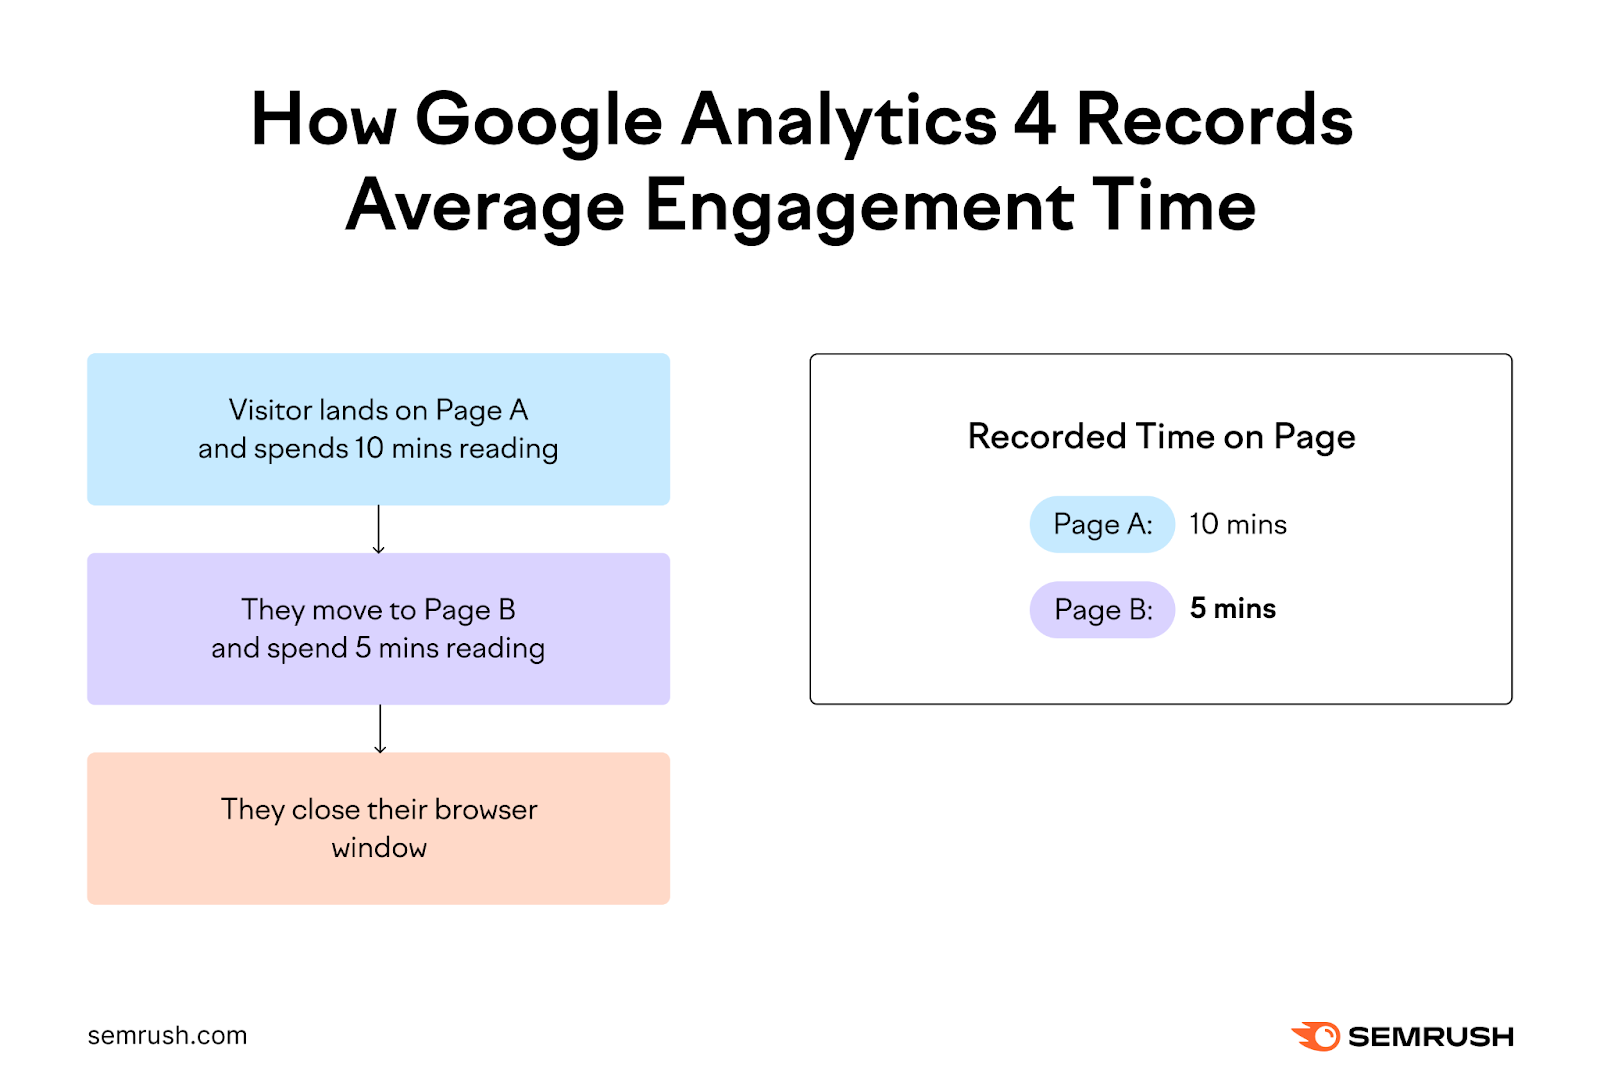 How Google Analytics 4 records average engagement time